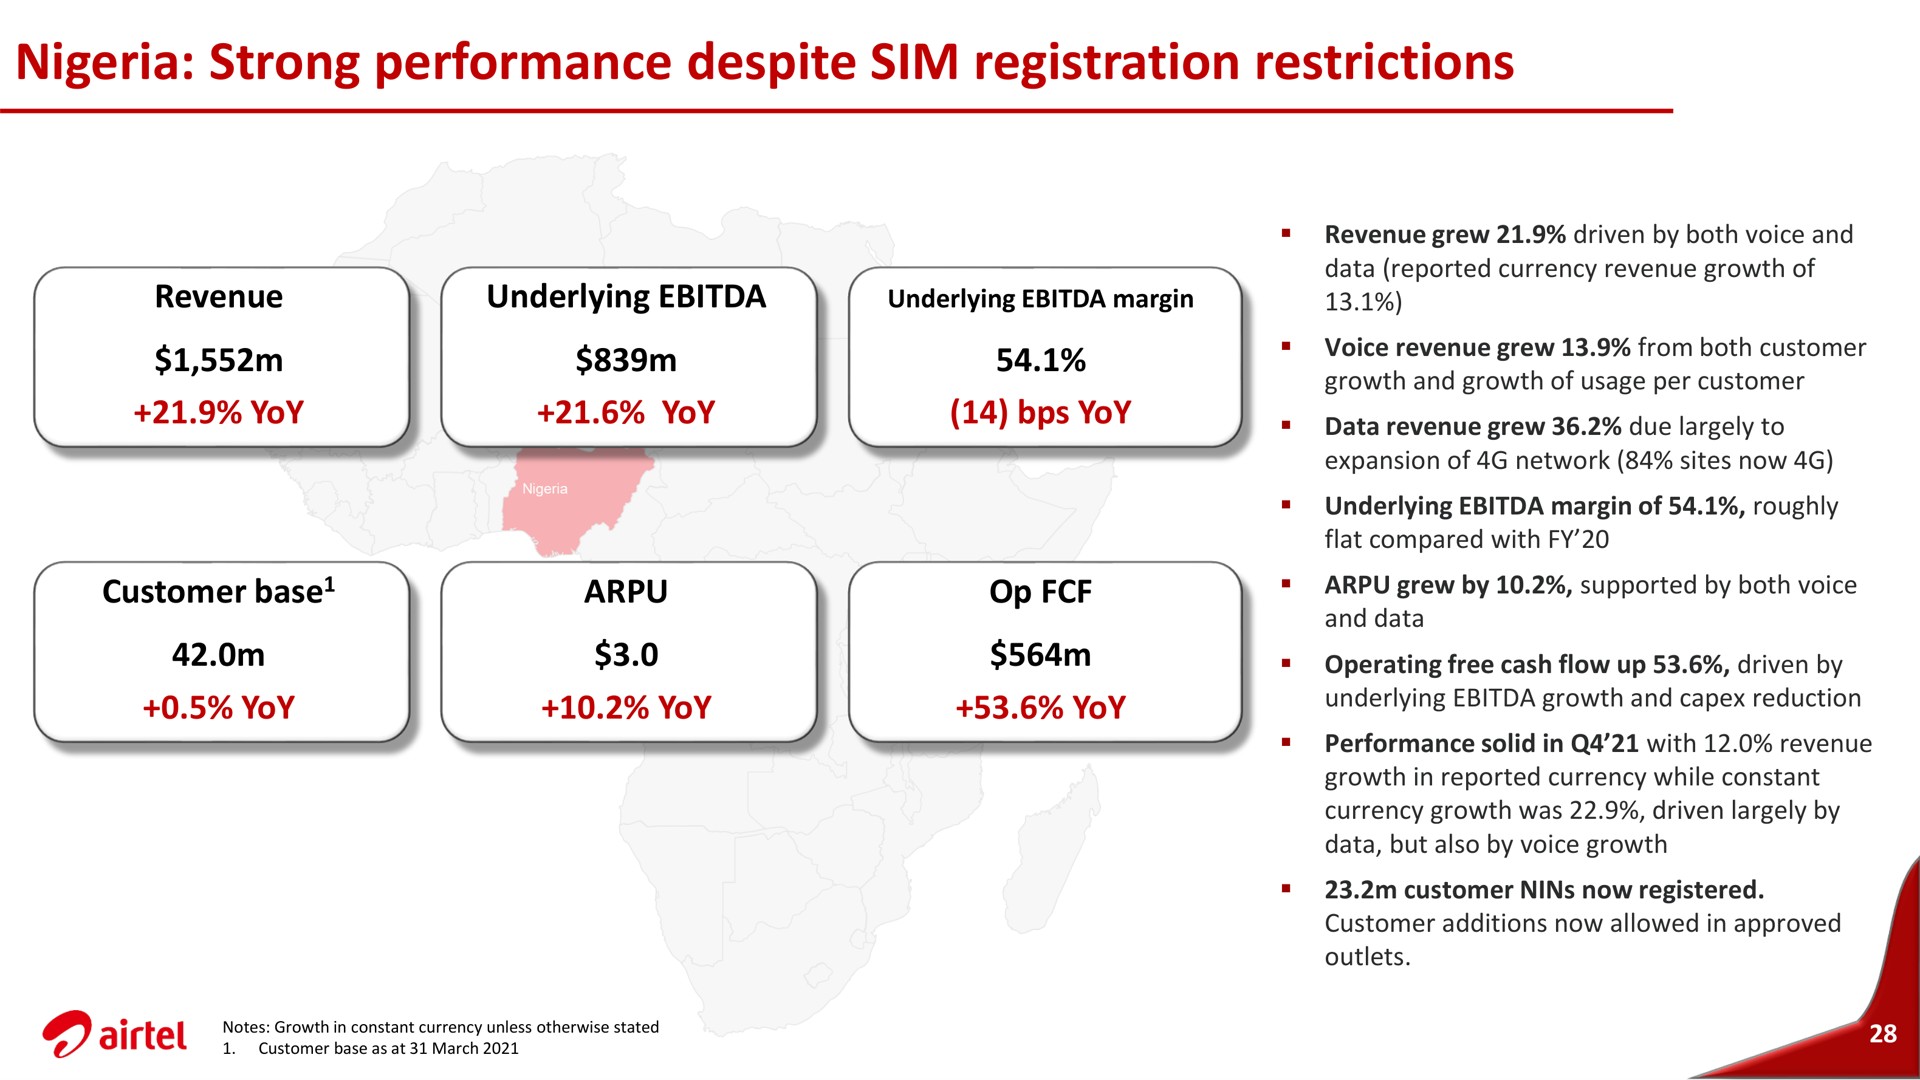 strong performance despite registration restrictions | Airtel Africa